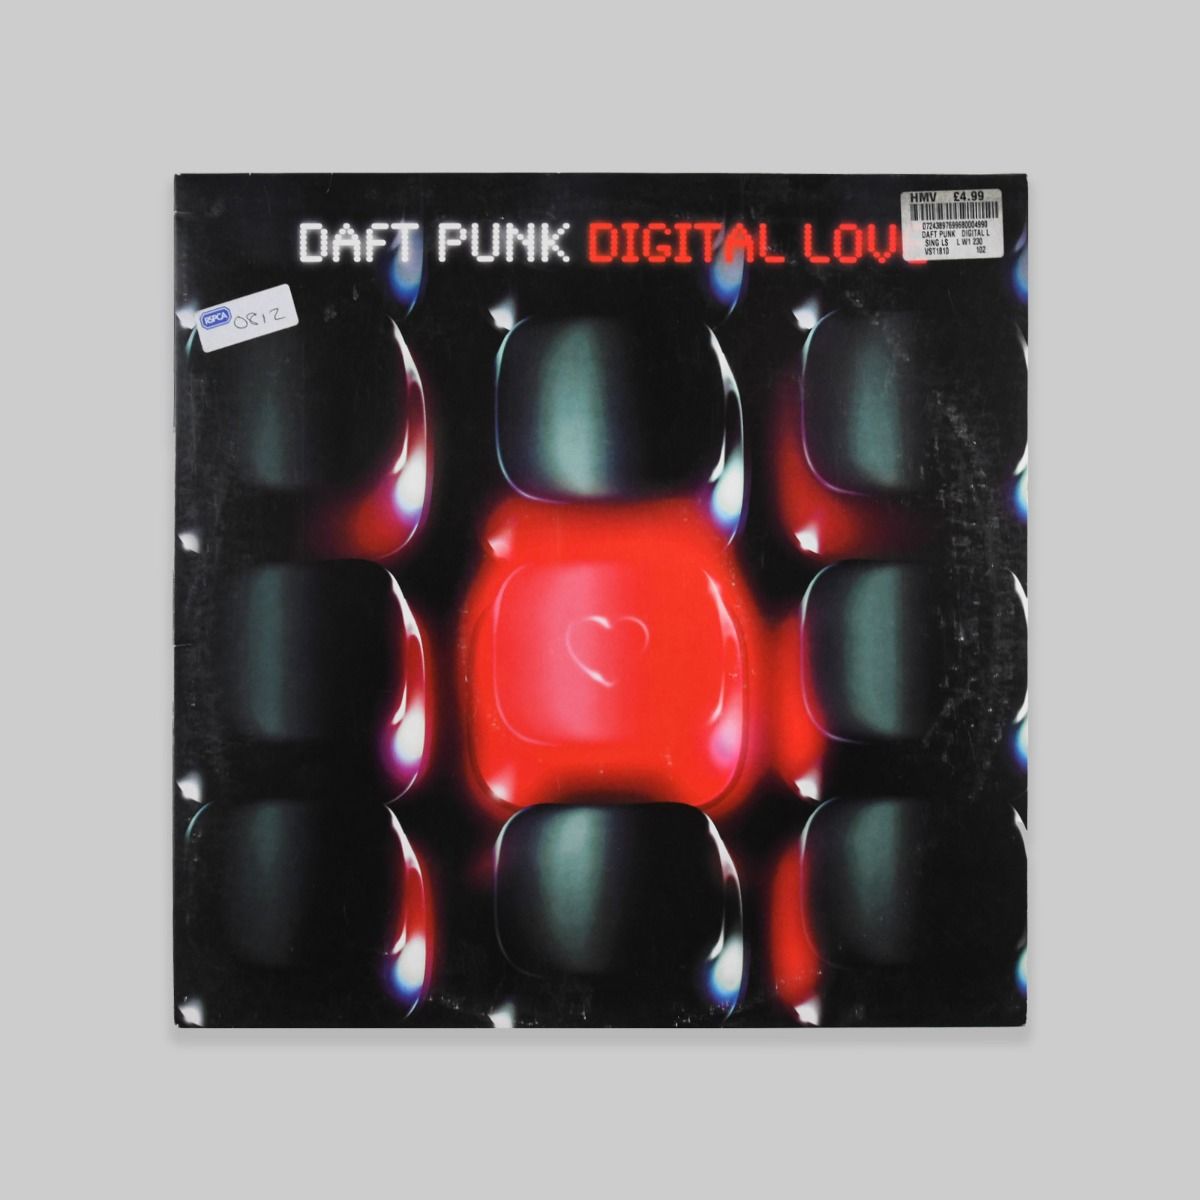 Daft Punk – Digital Love 12"